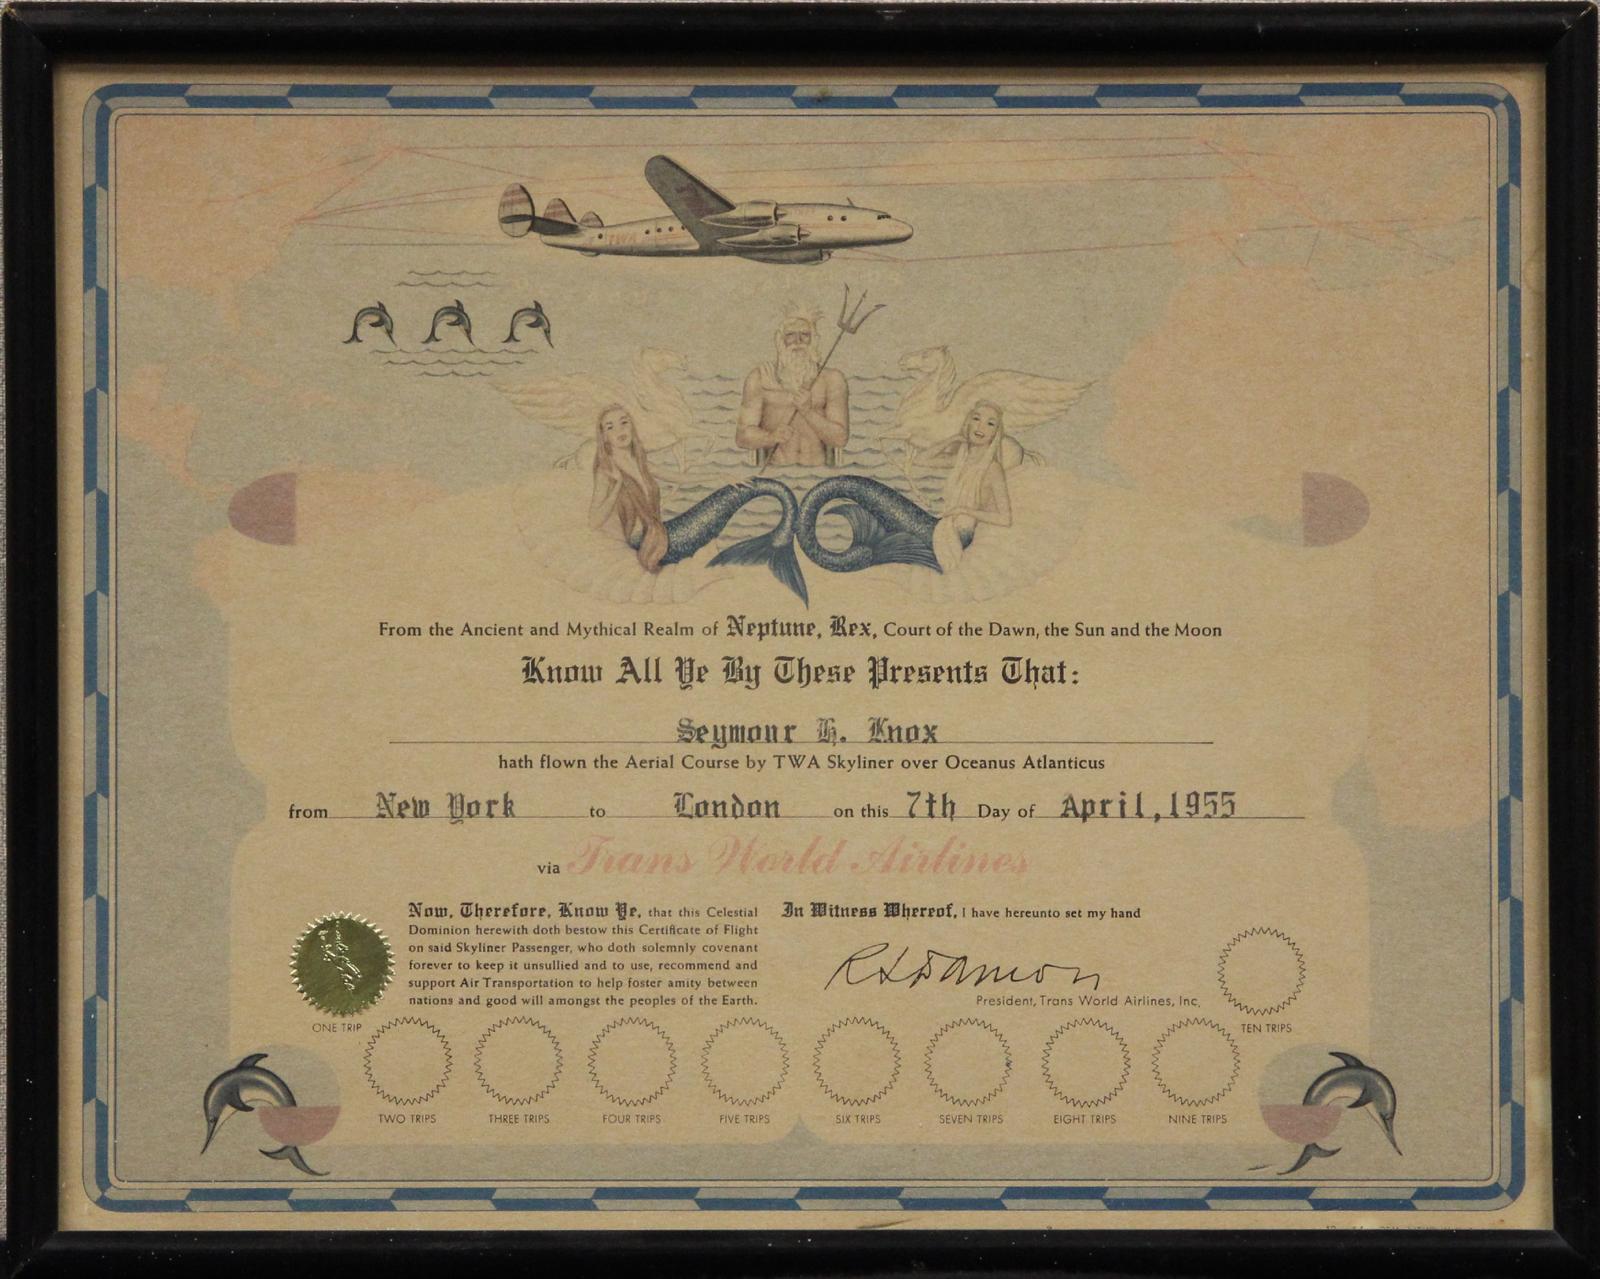 Certificat Skyliner de la TWA, 1955 - Print de Unknown